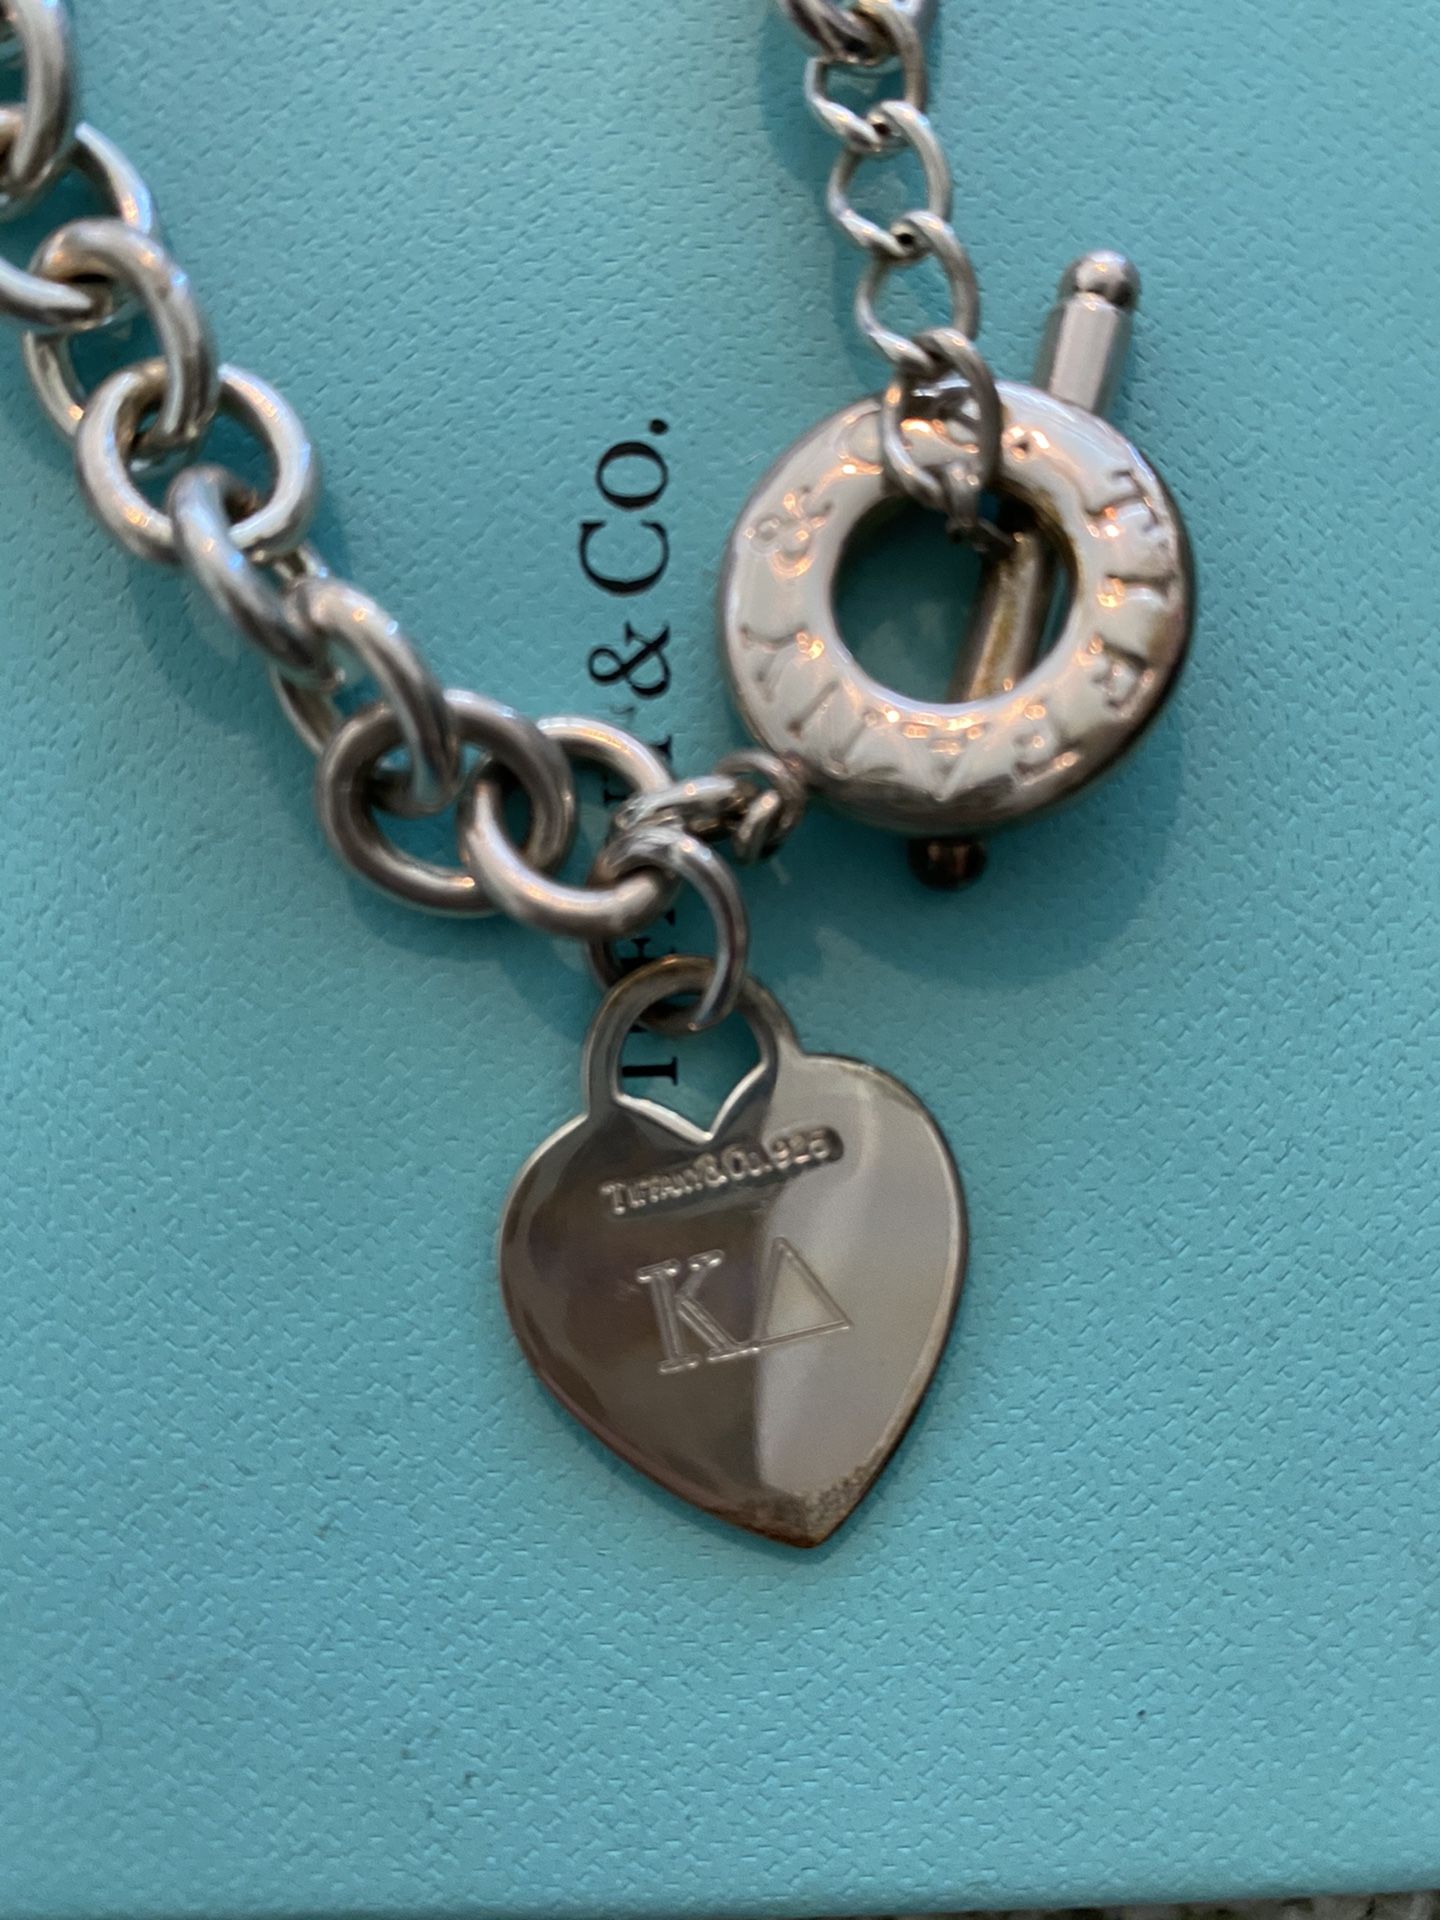 Tiffany & Co. Sorority “KD” engraved Necklace